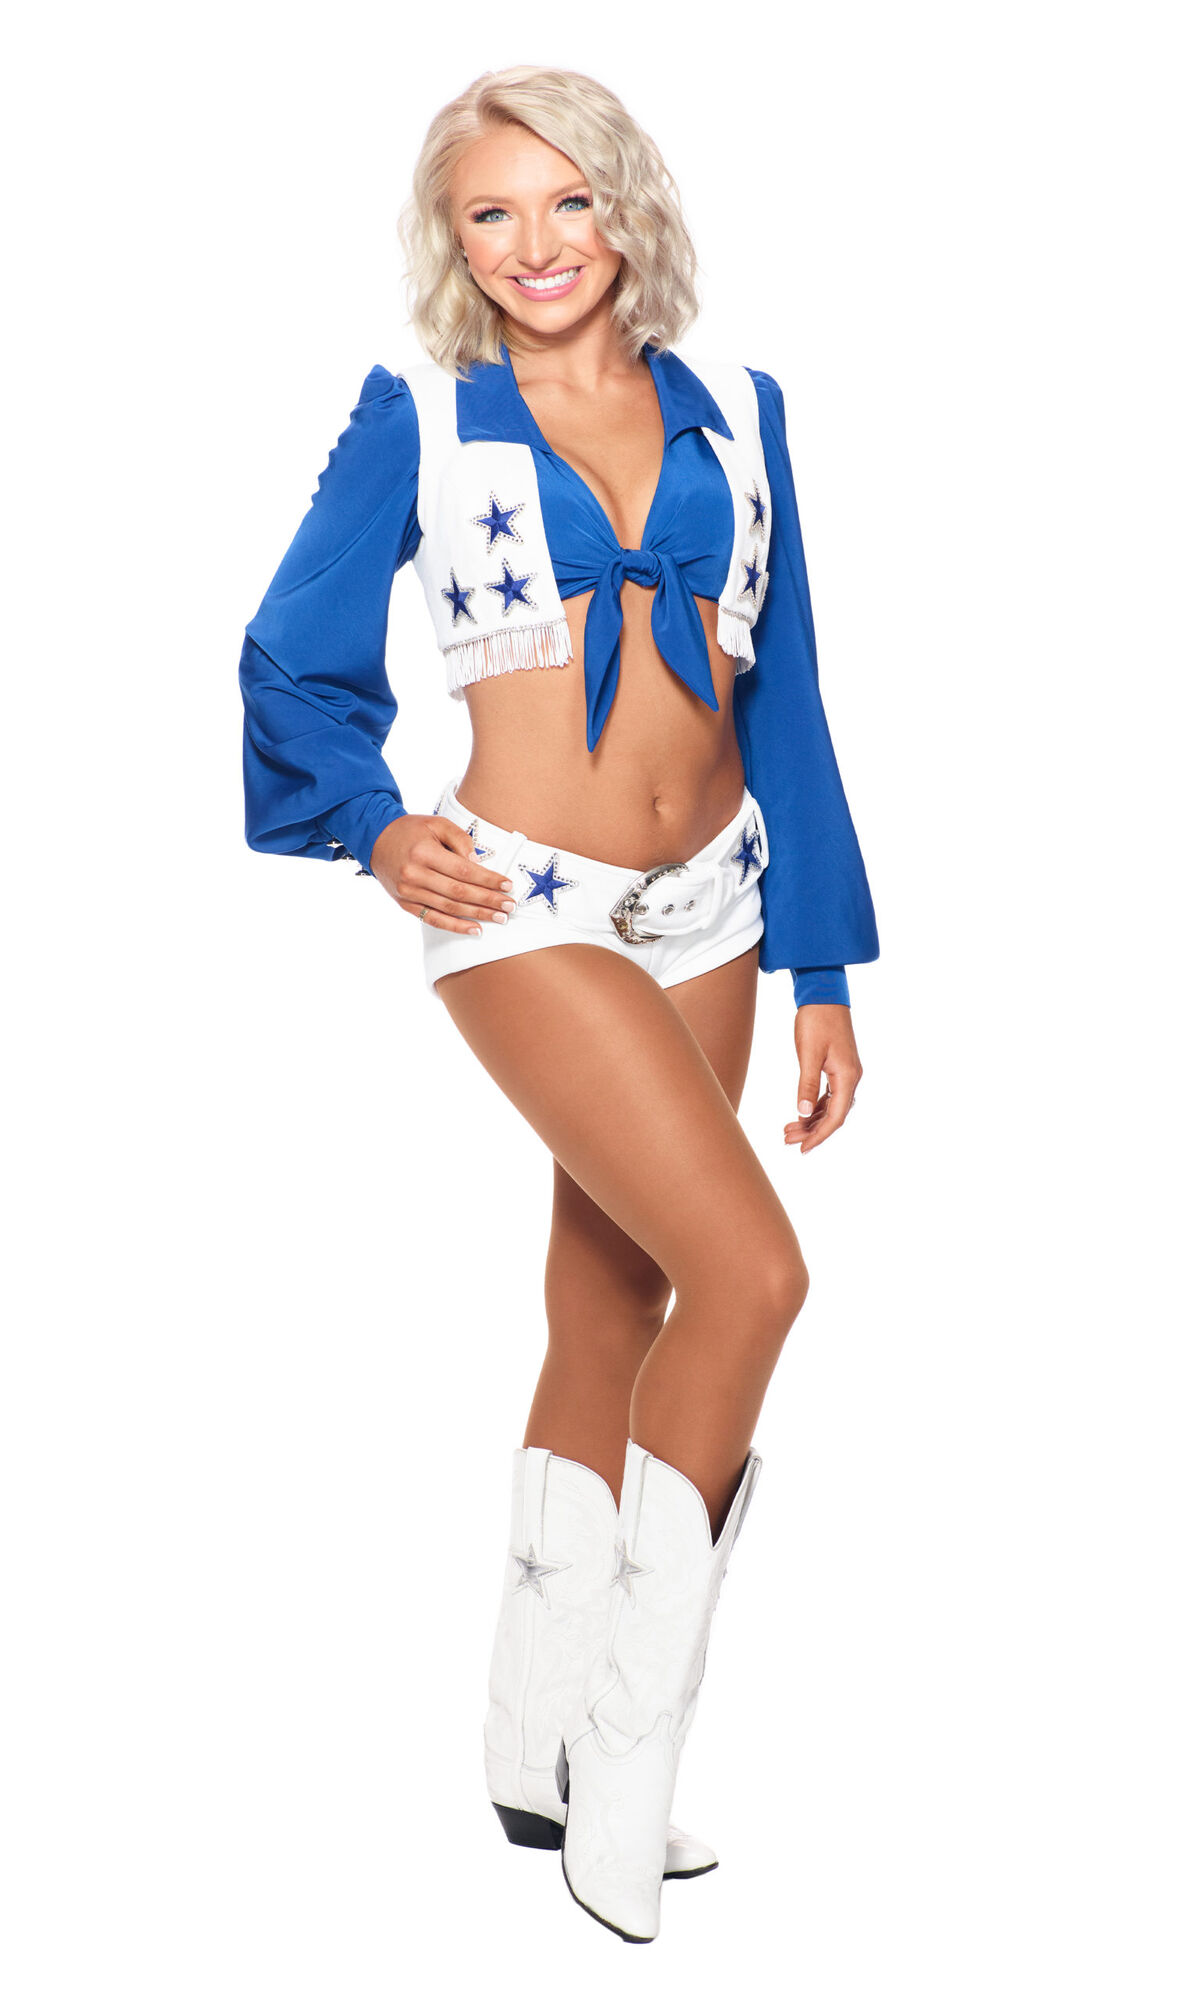 fishsports ✭ on X: Dallas #Cowboys Cheerleaders 'Sexy' Halloween:  @PaigeSpiranac Models - Photos    / X